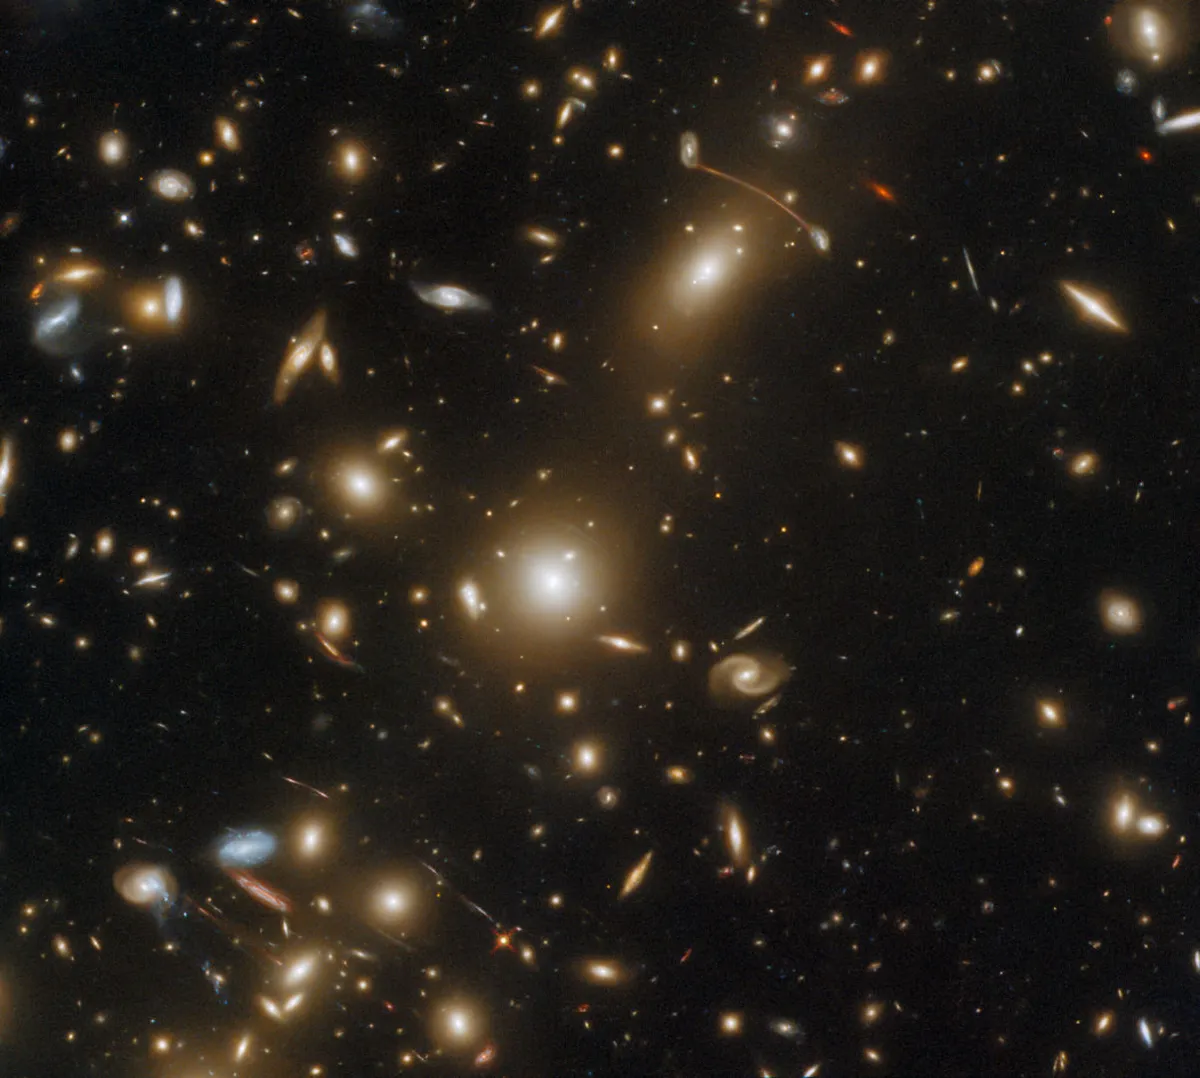 Galaxy Cluster Abel 1351, Hubble Space Telescope, 20 June 2022. Credit: ESA/Hubble & NASA, H. Ebeling. Acknowledgement: L. Shatz